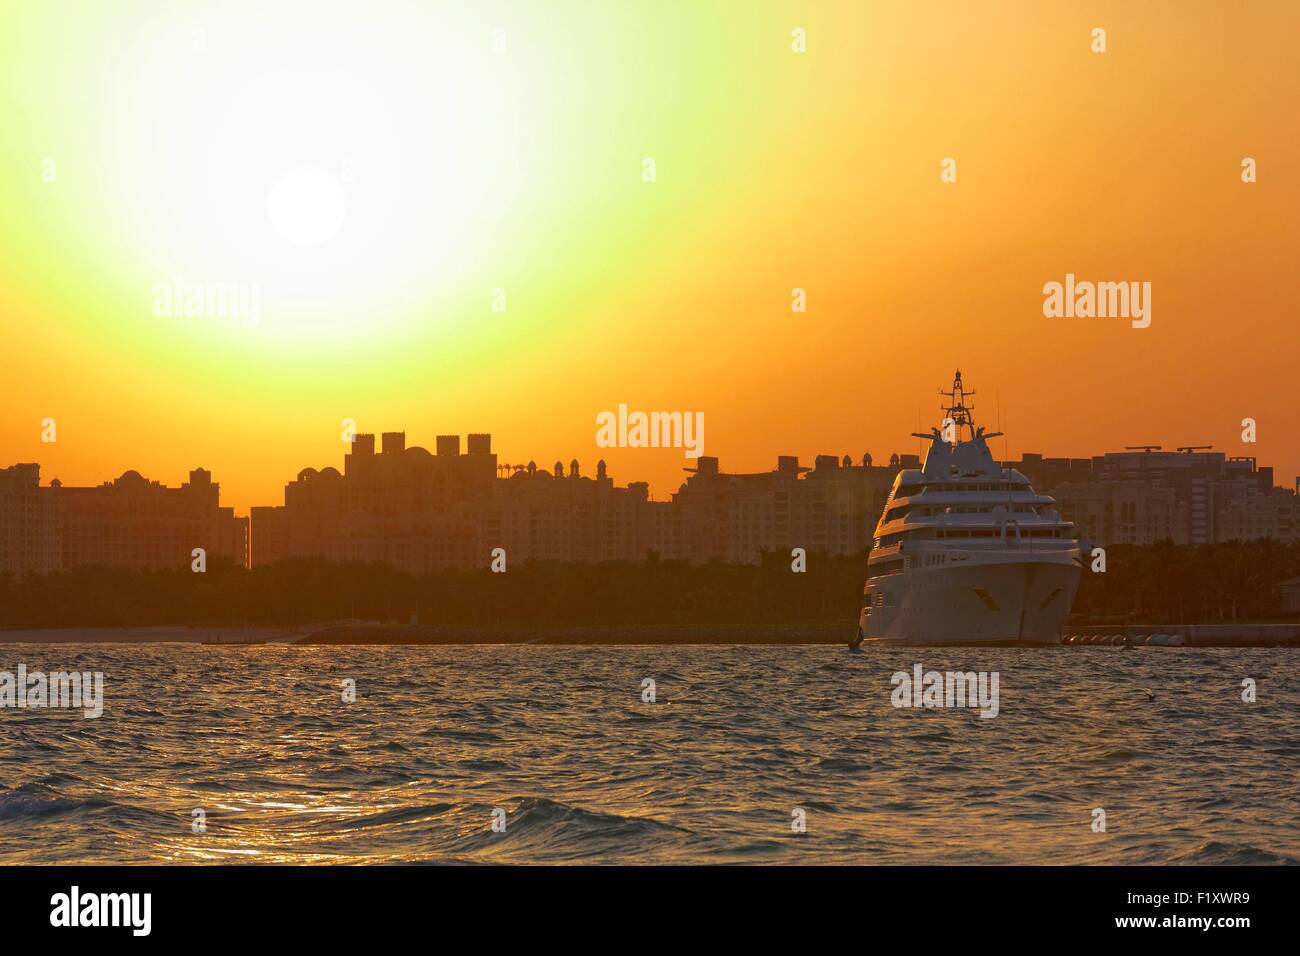 United Arab Emirates, Dubai, Palm Jumeirah, yacht at anchor Stock Photo